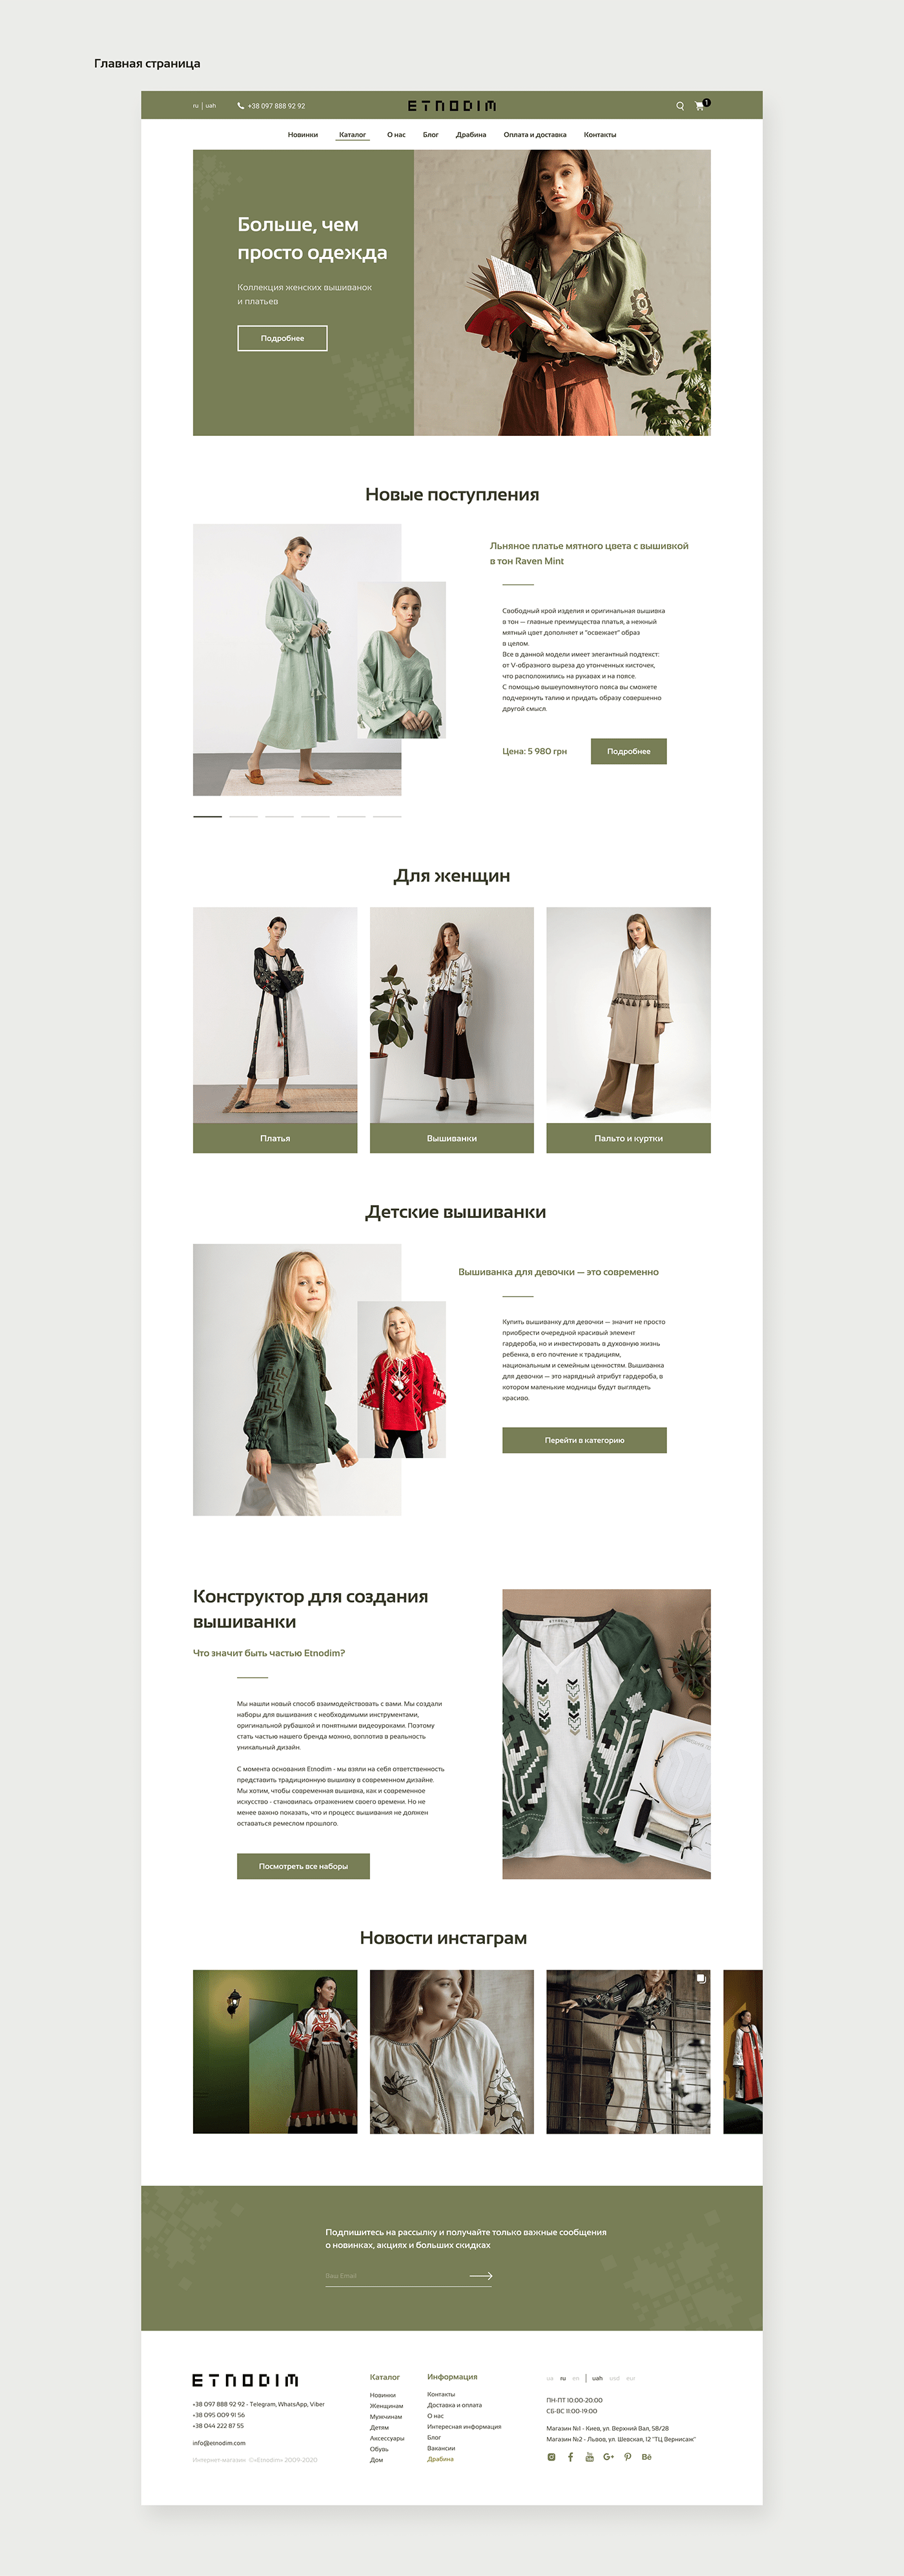 Redesign concept for Etnodim online store website.